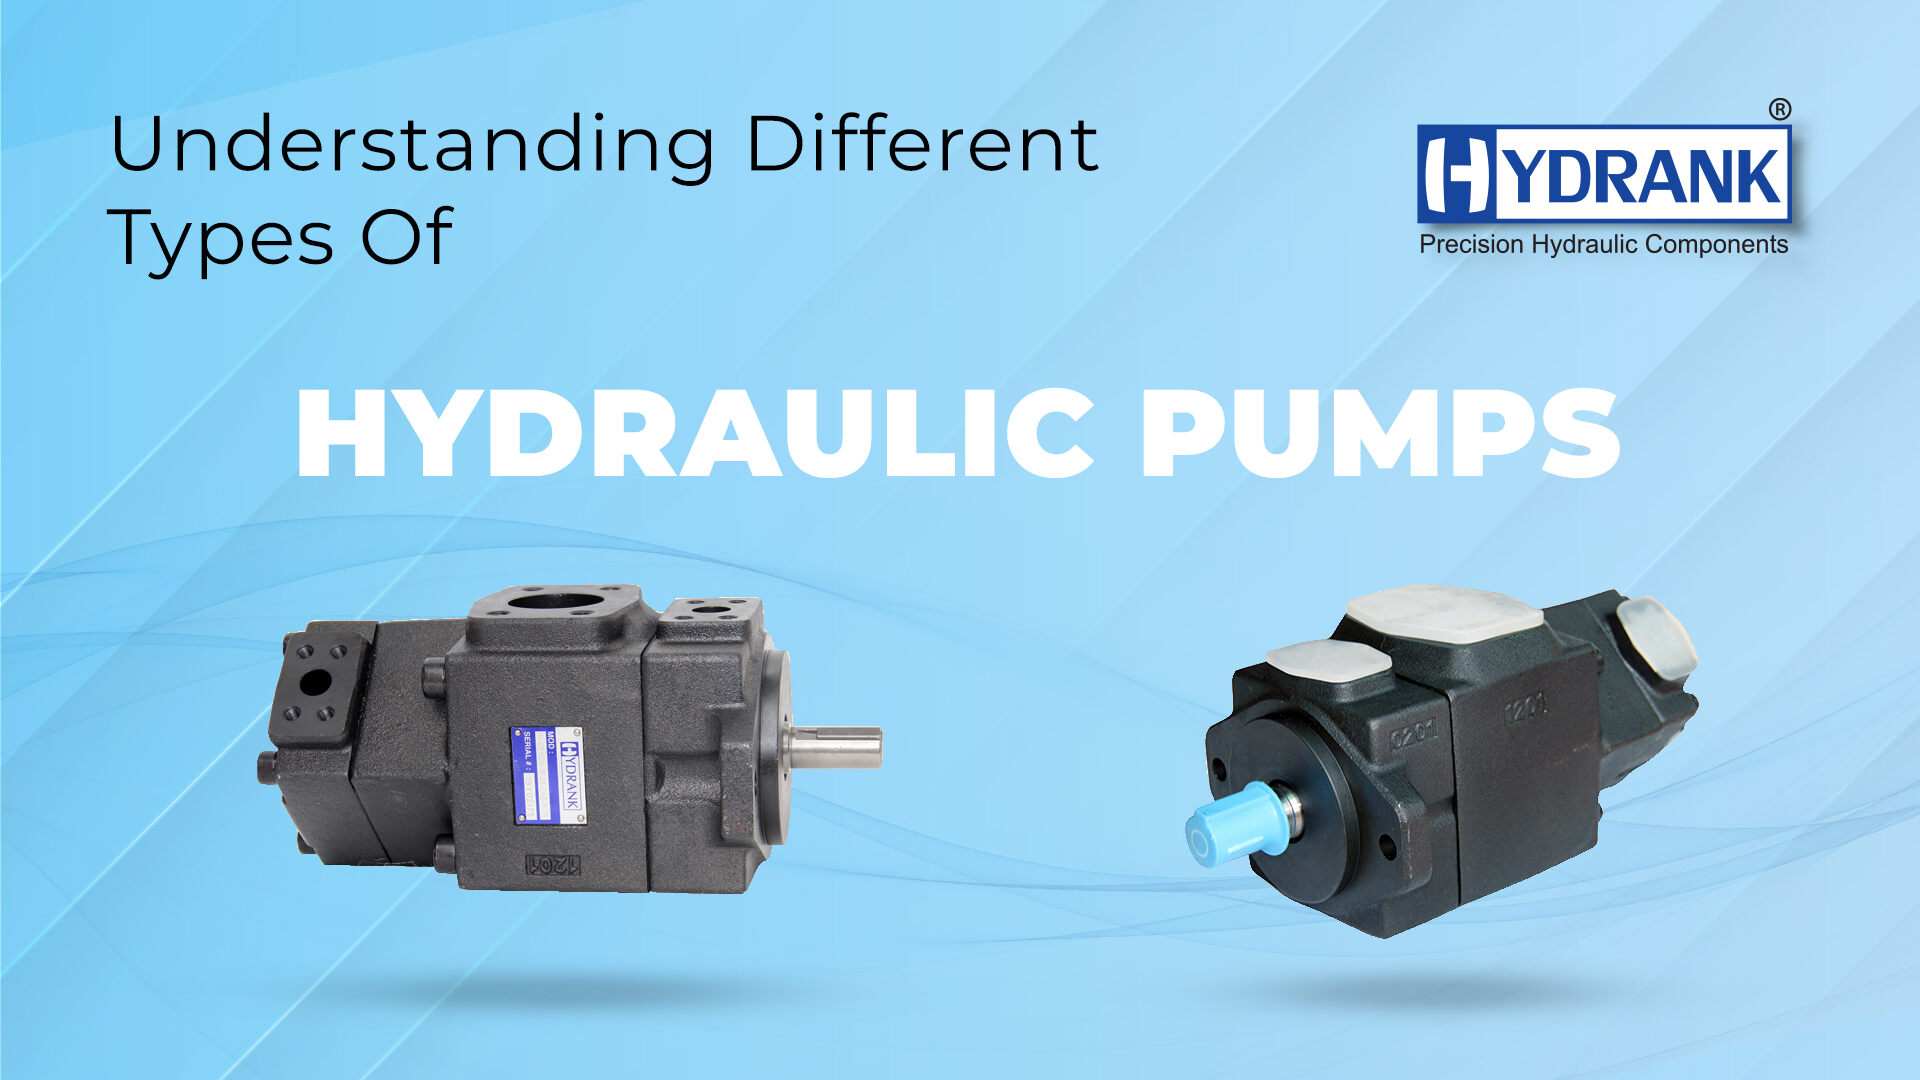 Understanding Different Types of Hydraulic Pumps